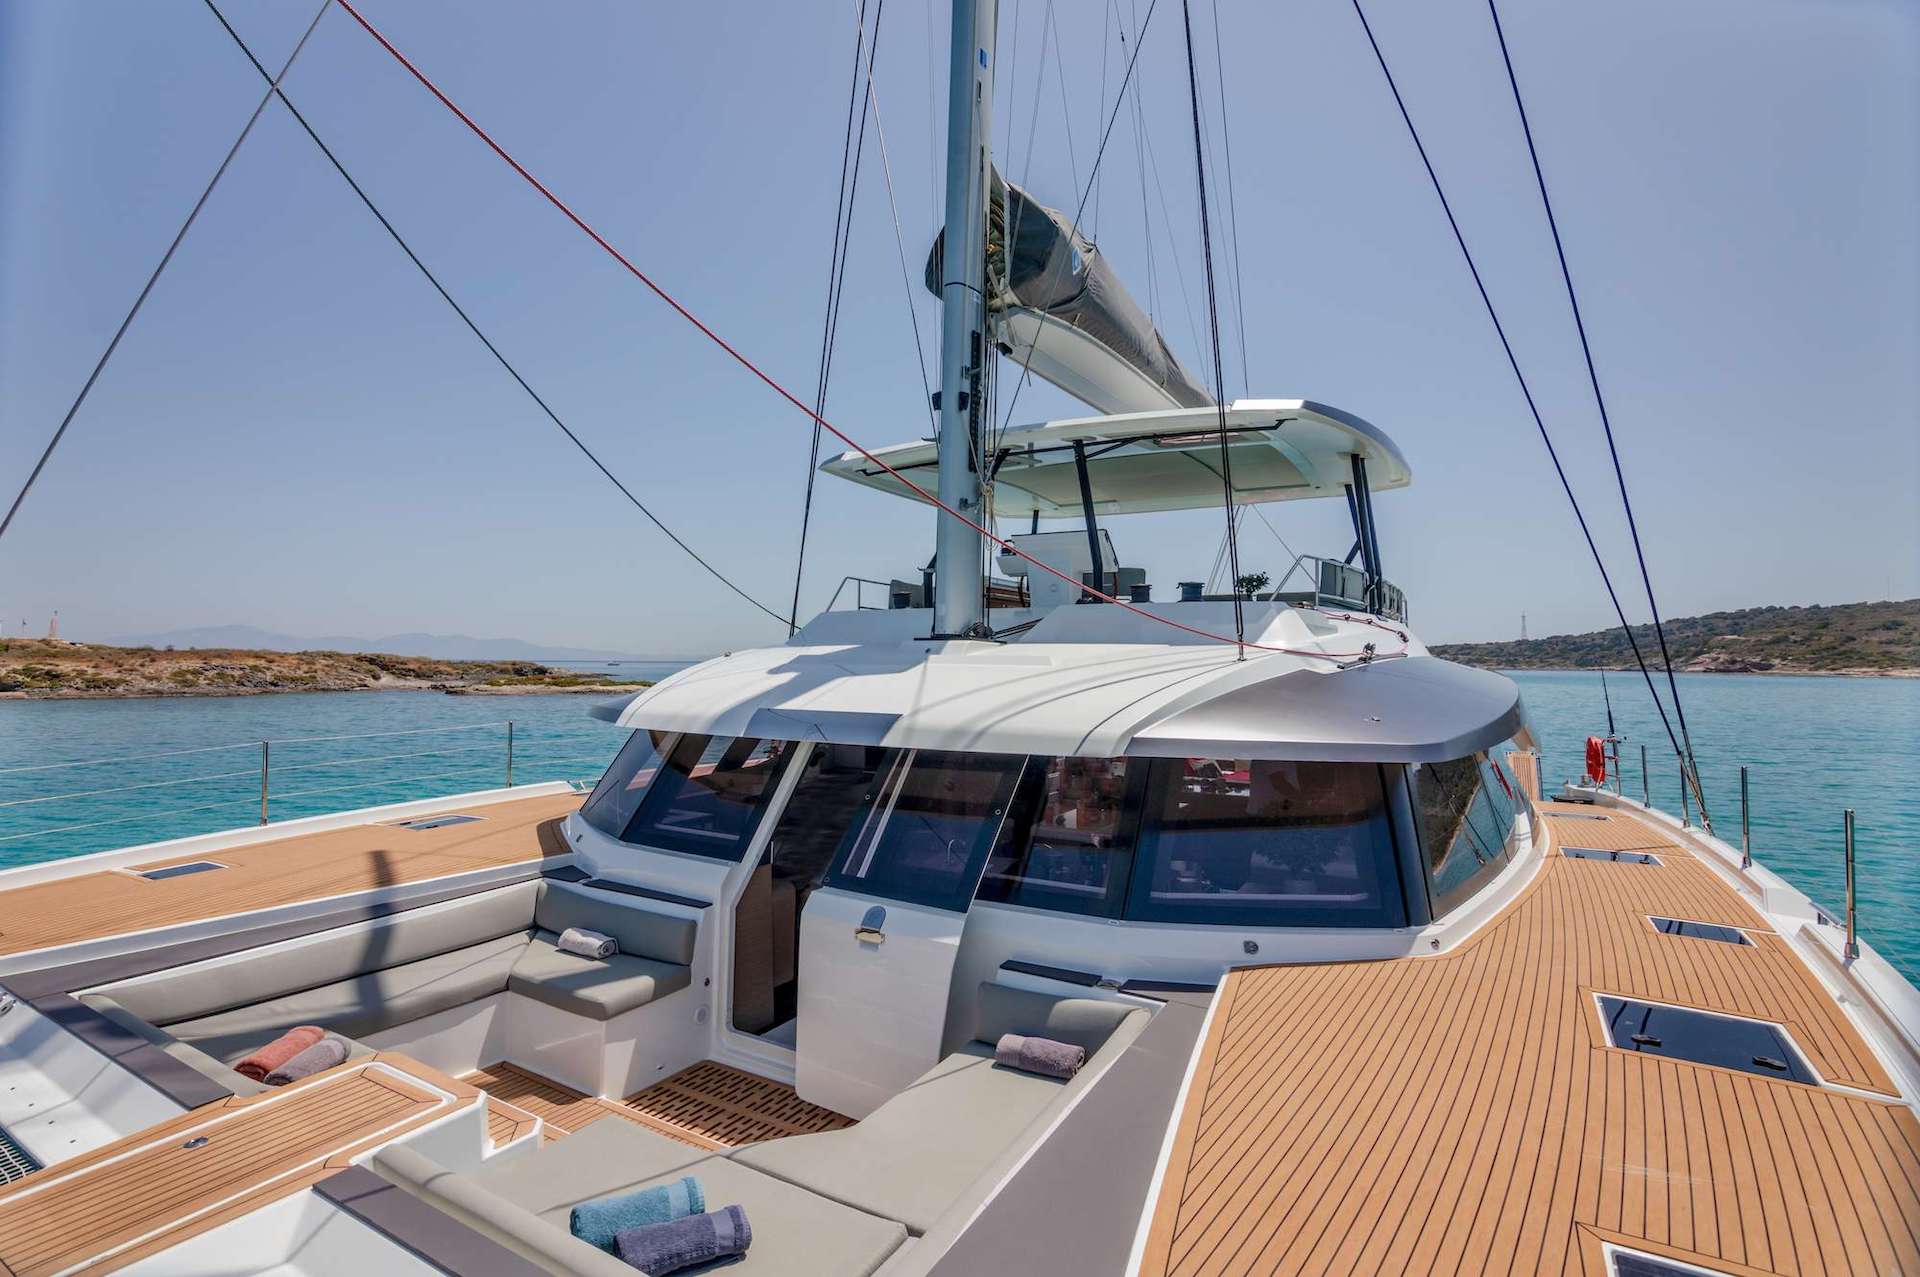 Astoria catamaran deck Greece